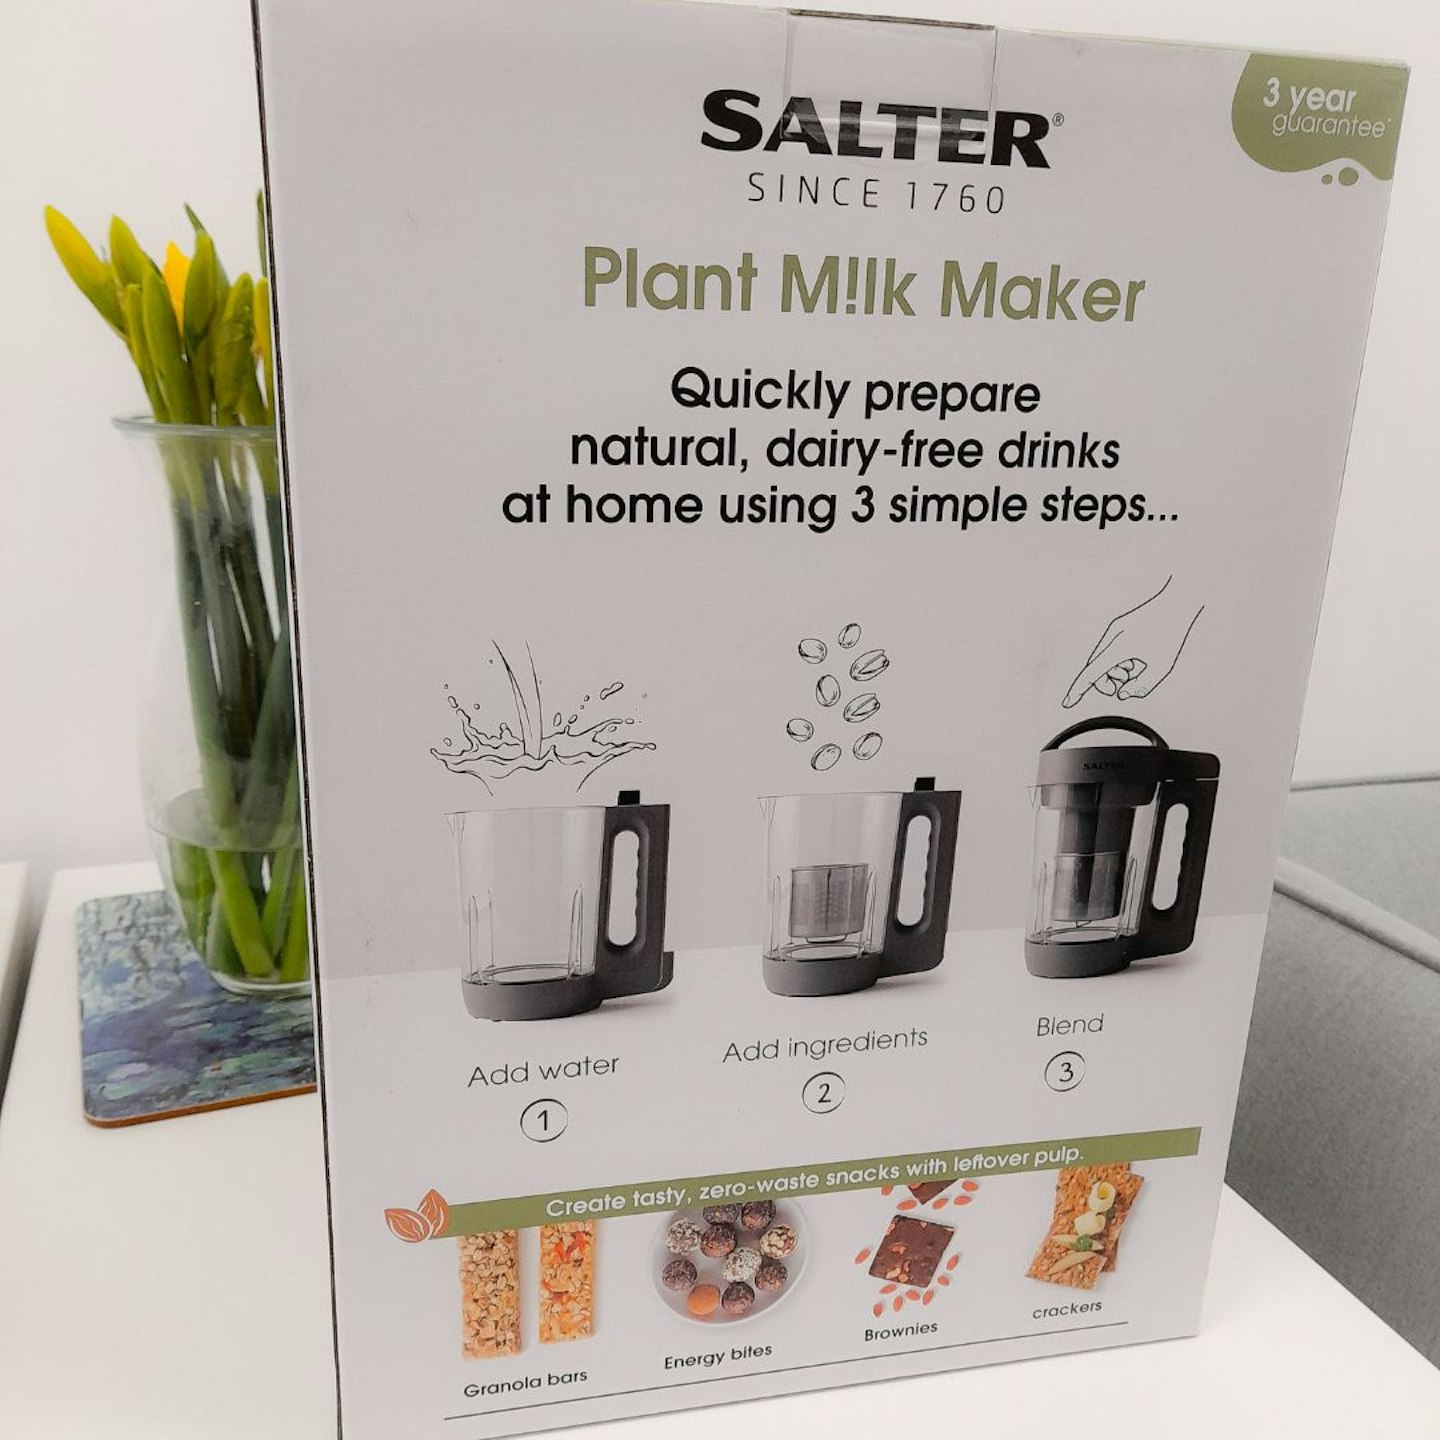 Unboxing the Salter Plant M!lk Maker.